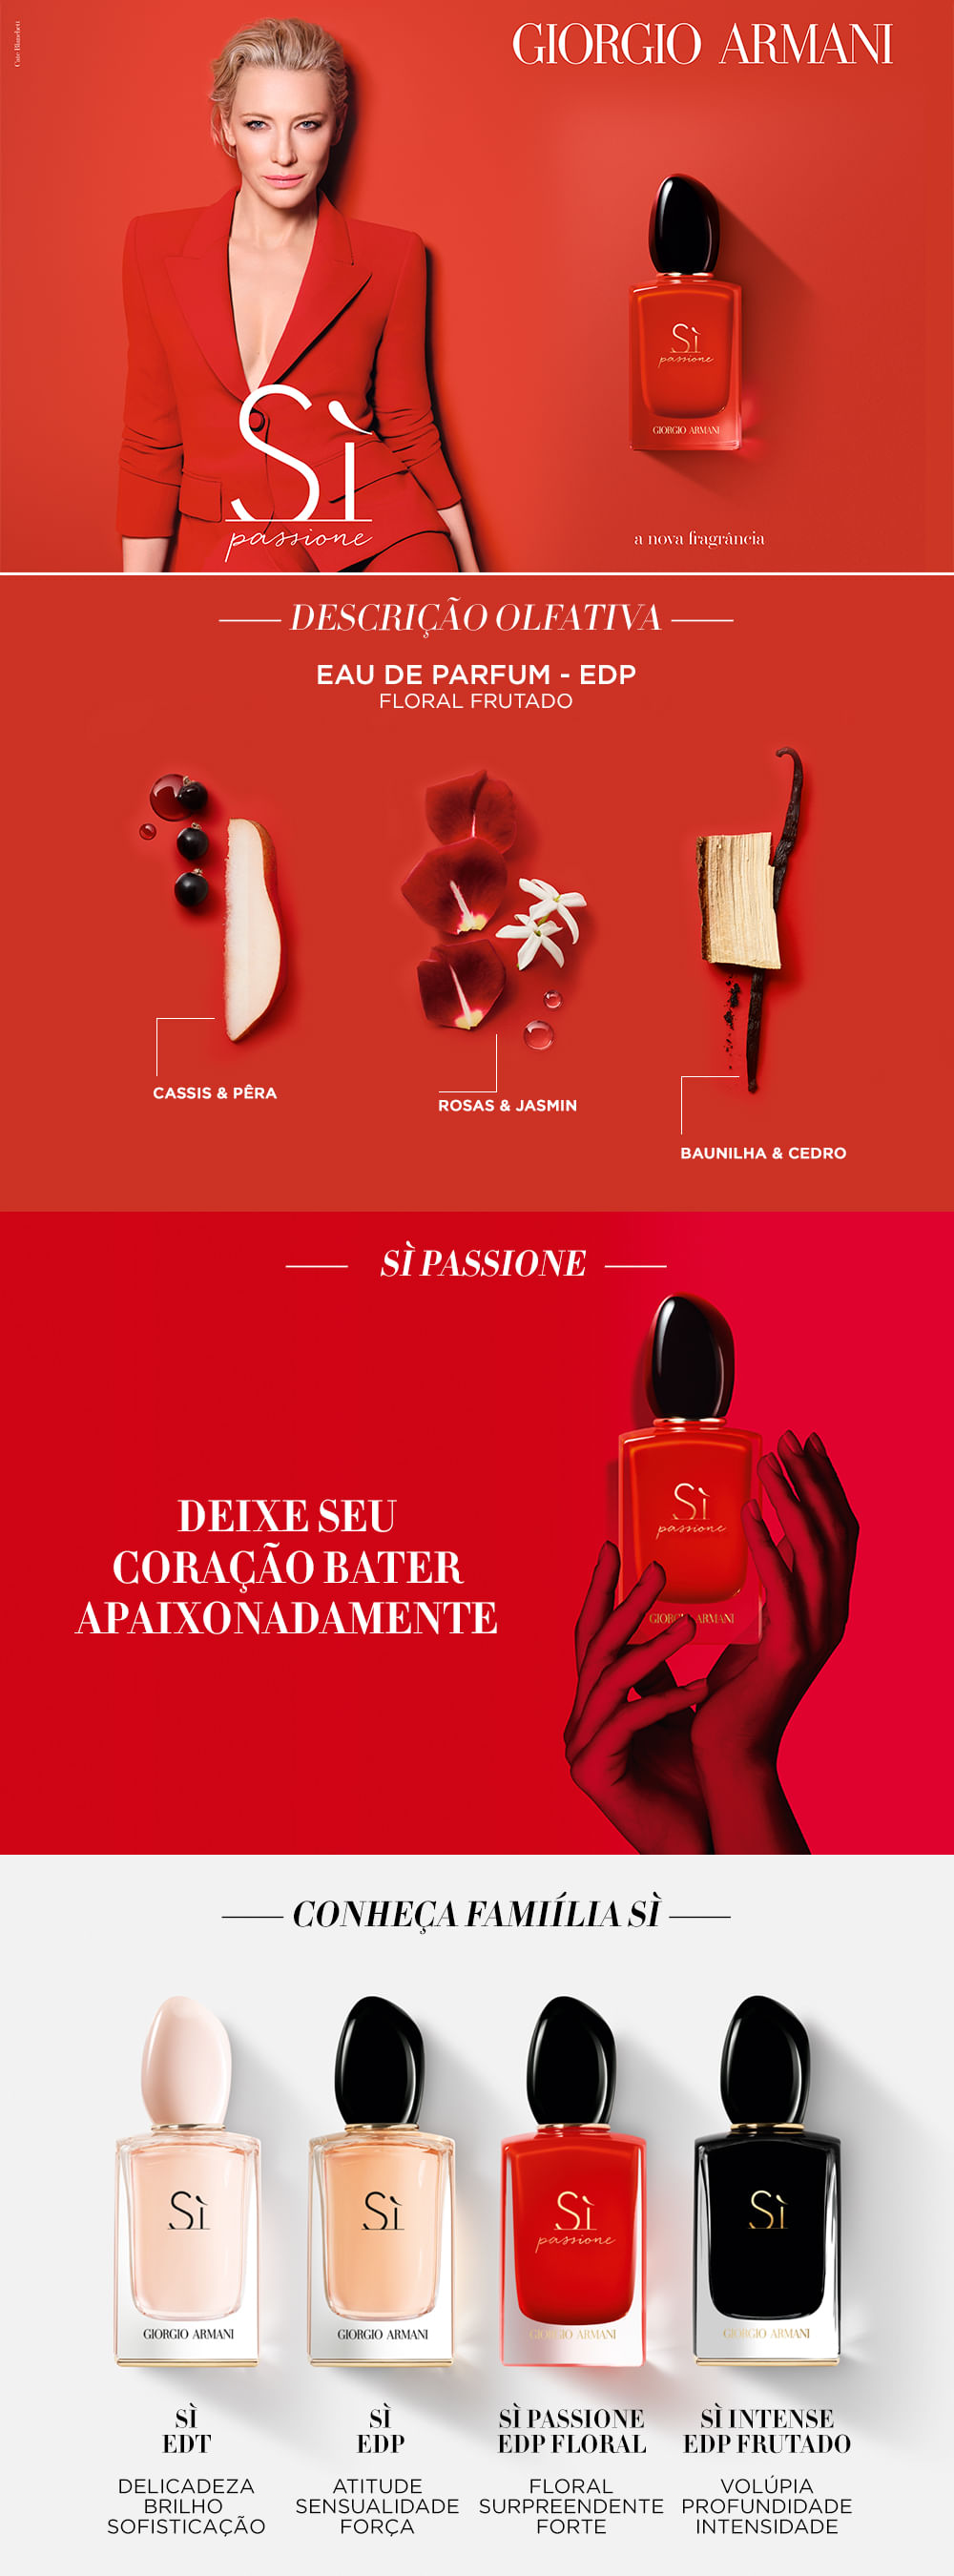  Sì Passione Giorgio Armani Perfume Feminino - Eau de Parfum